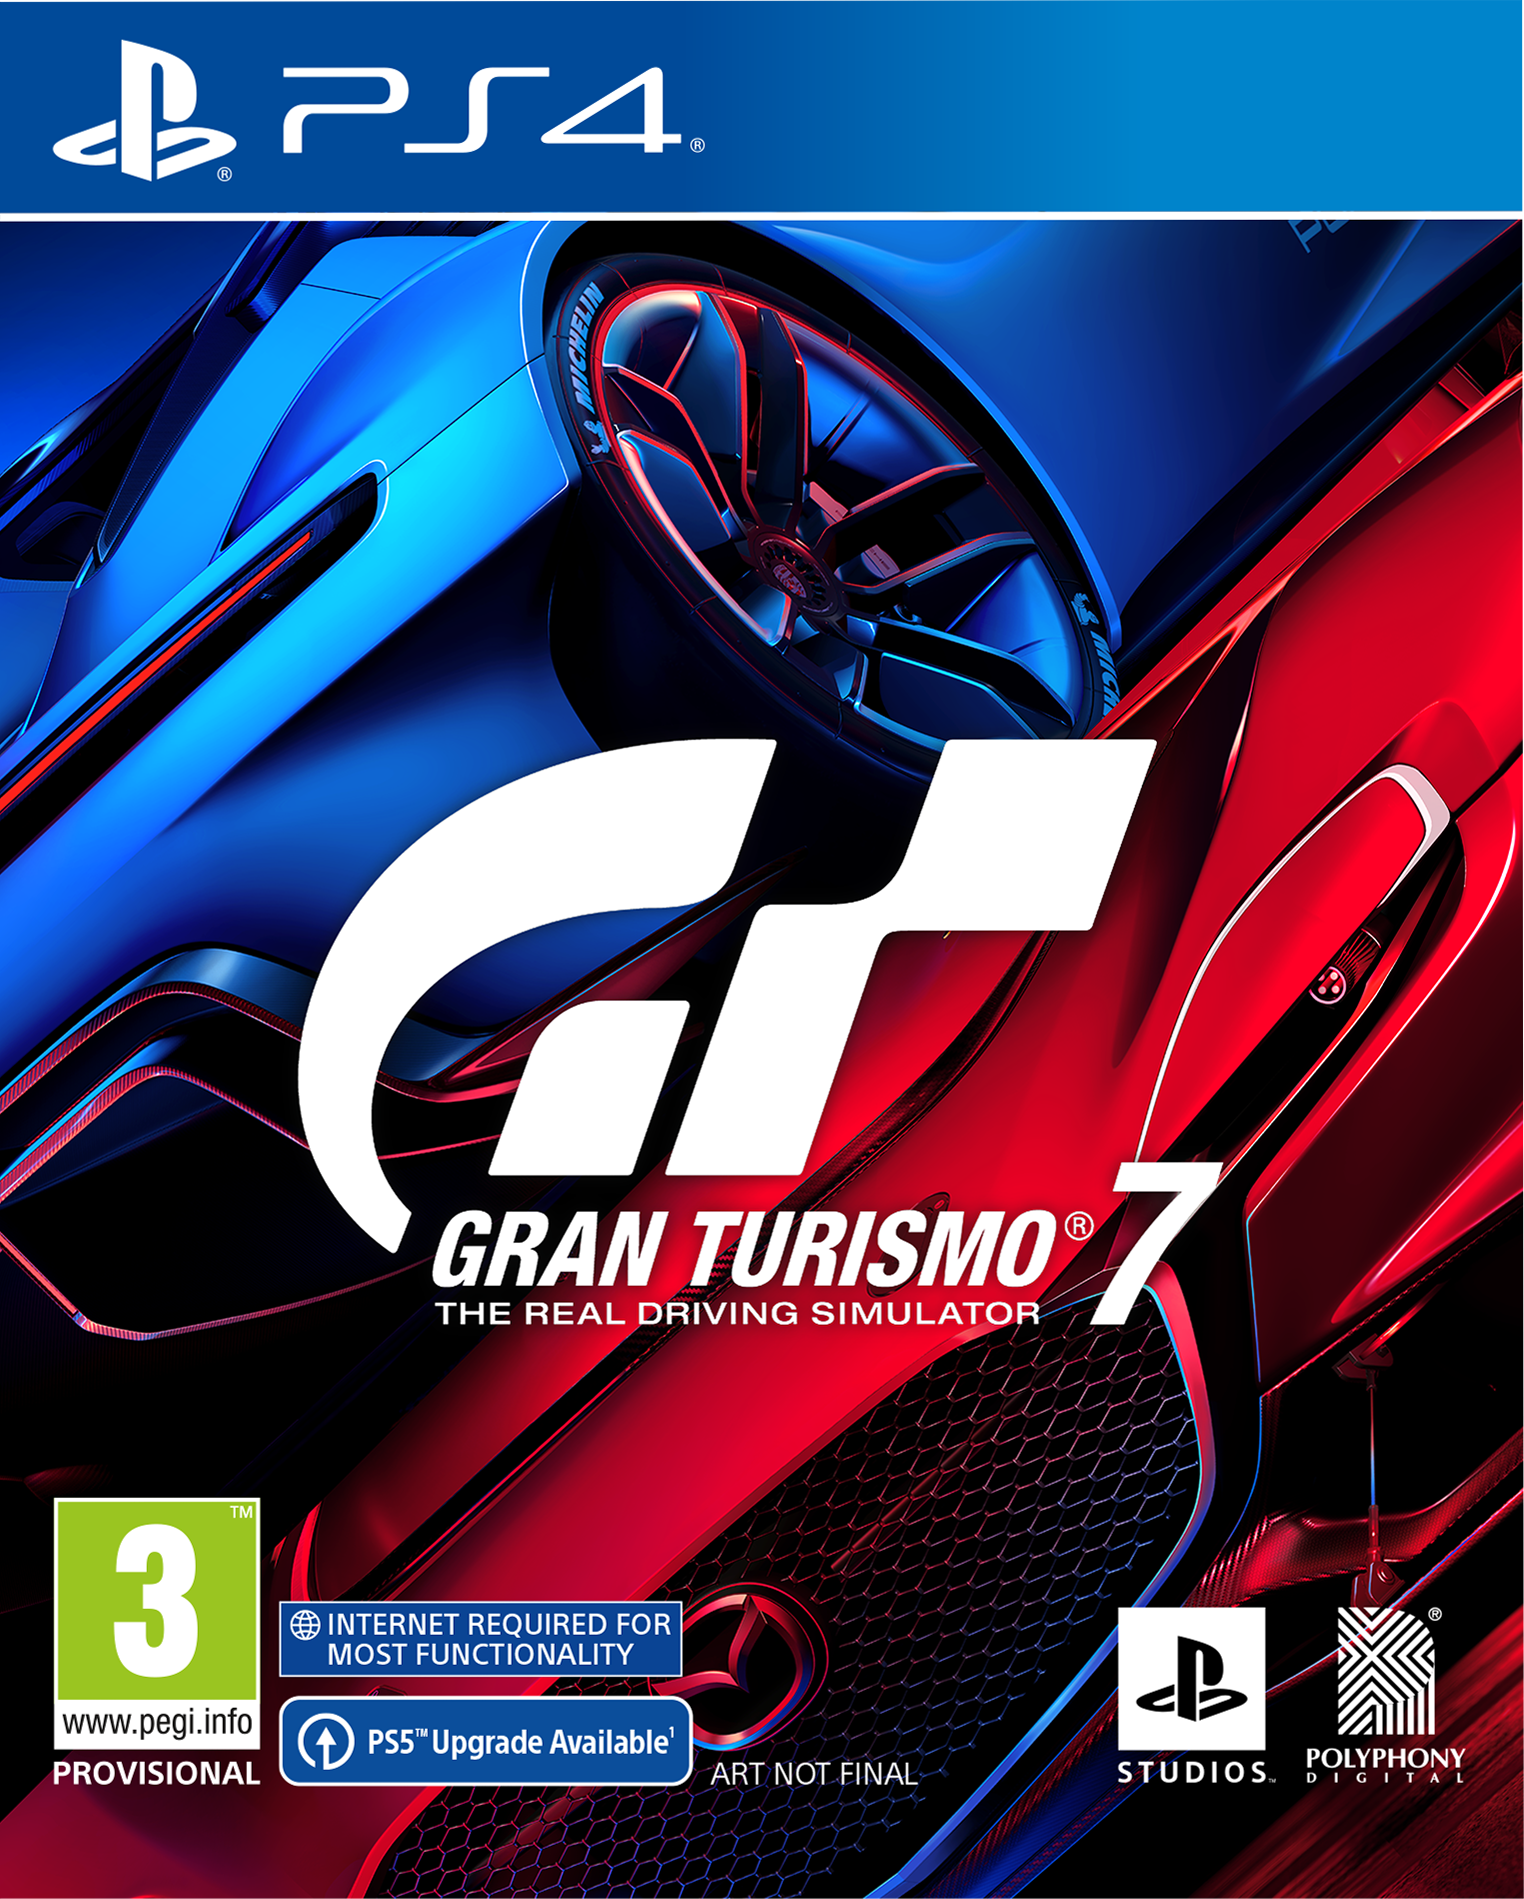 <a href="/node/52325">Gran Turismo 7</a>